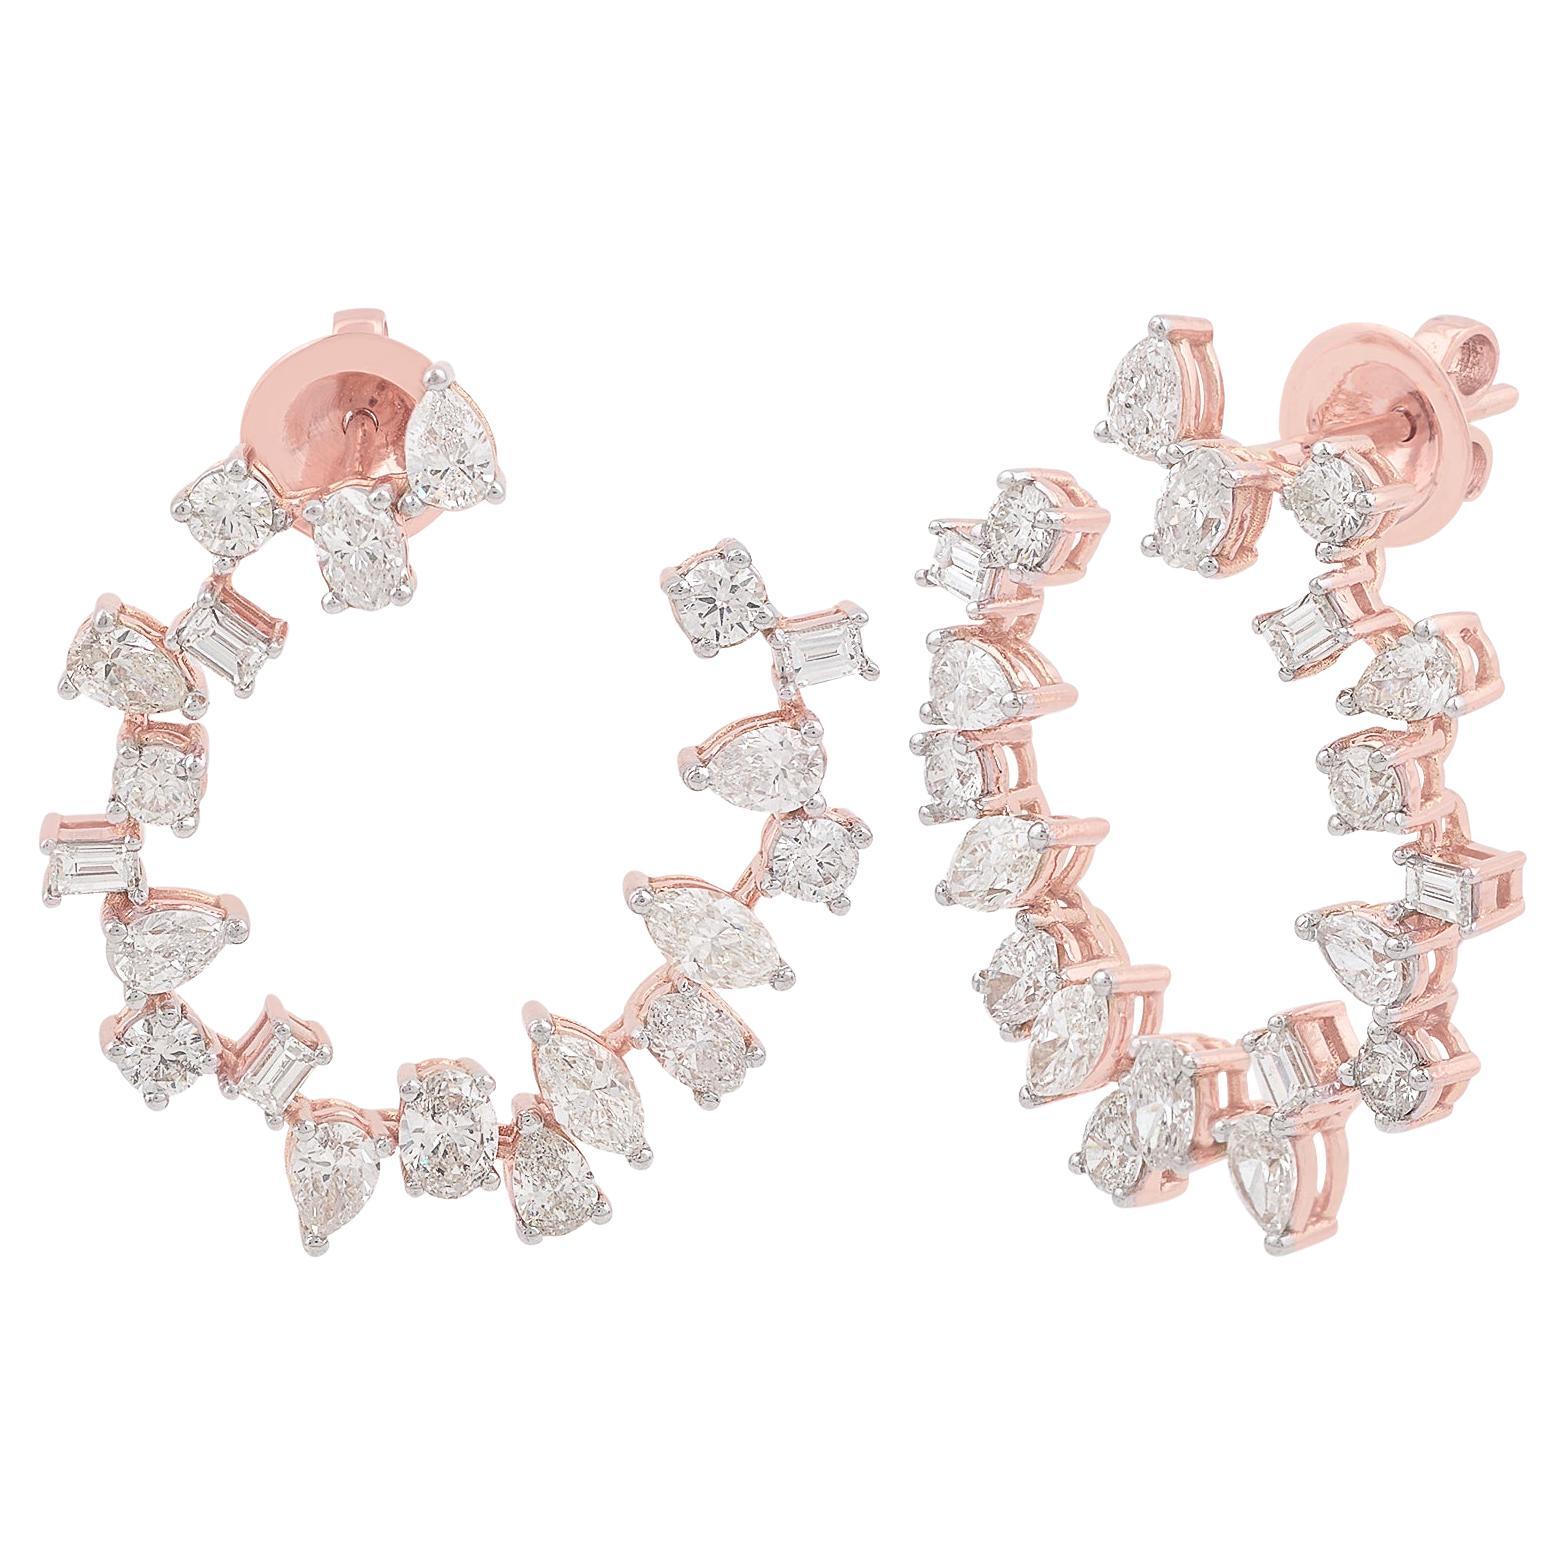 3.90 Carat Pear Baguette Diamond Earrings Solid 18k Rose Gold Handmade Jewelry For Sale